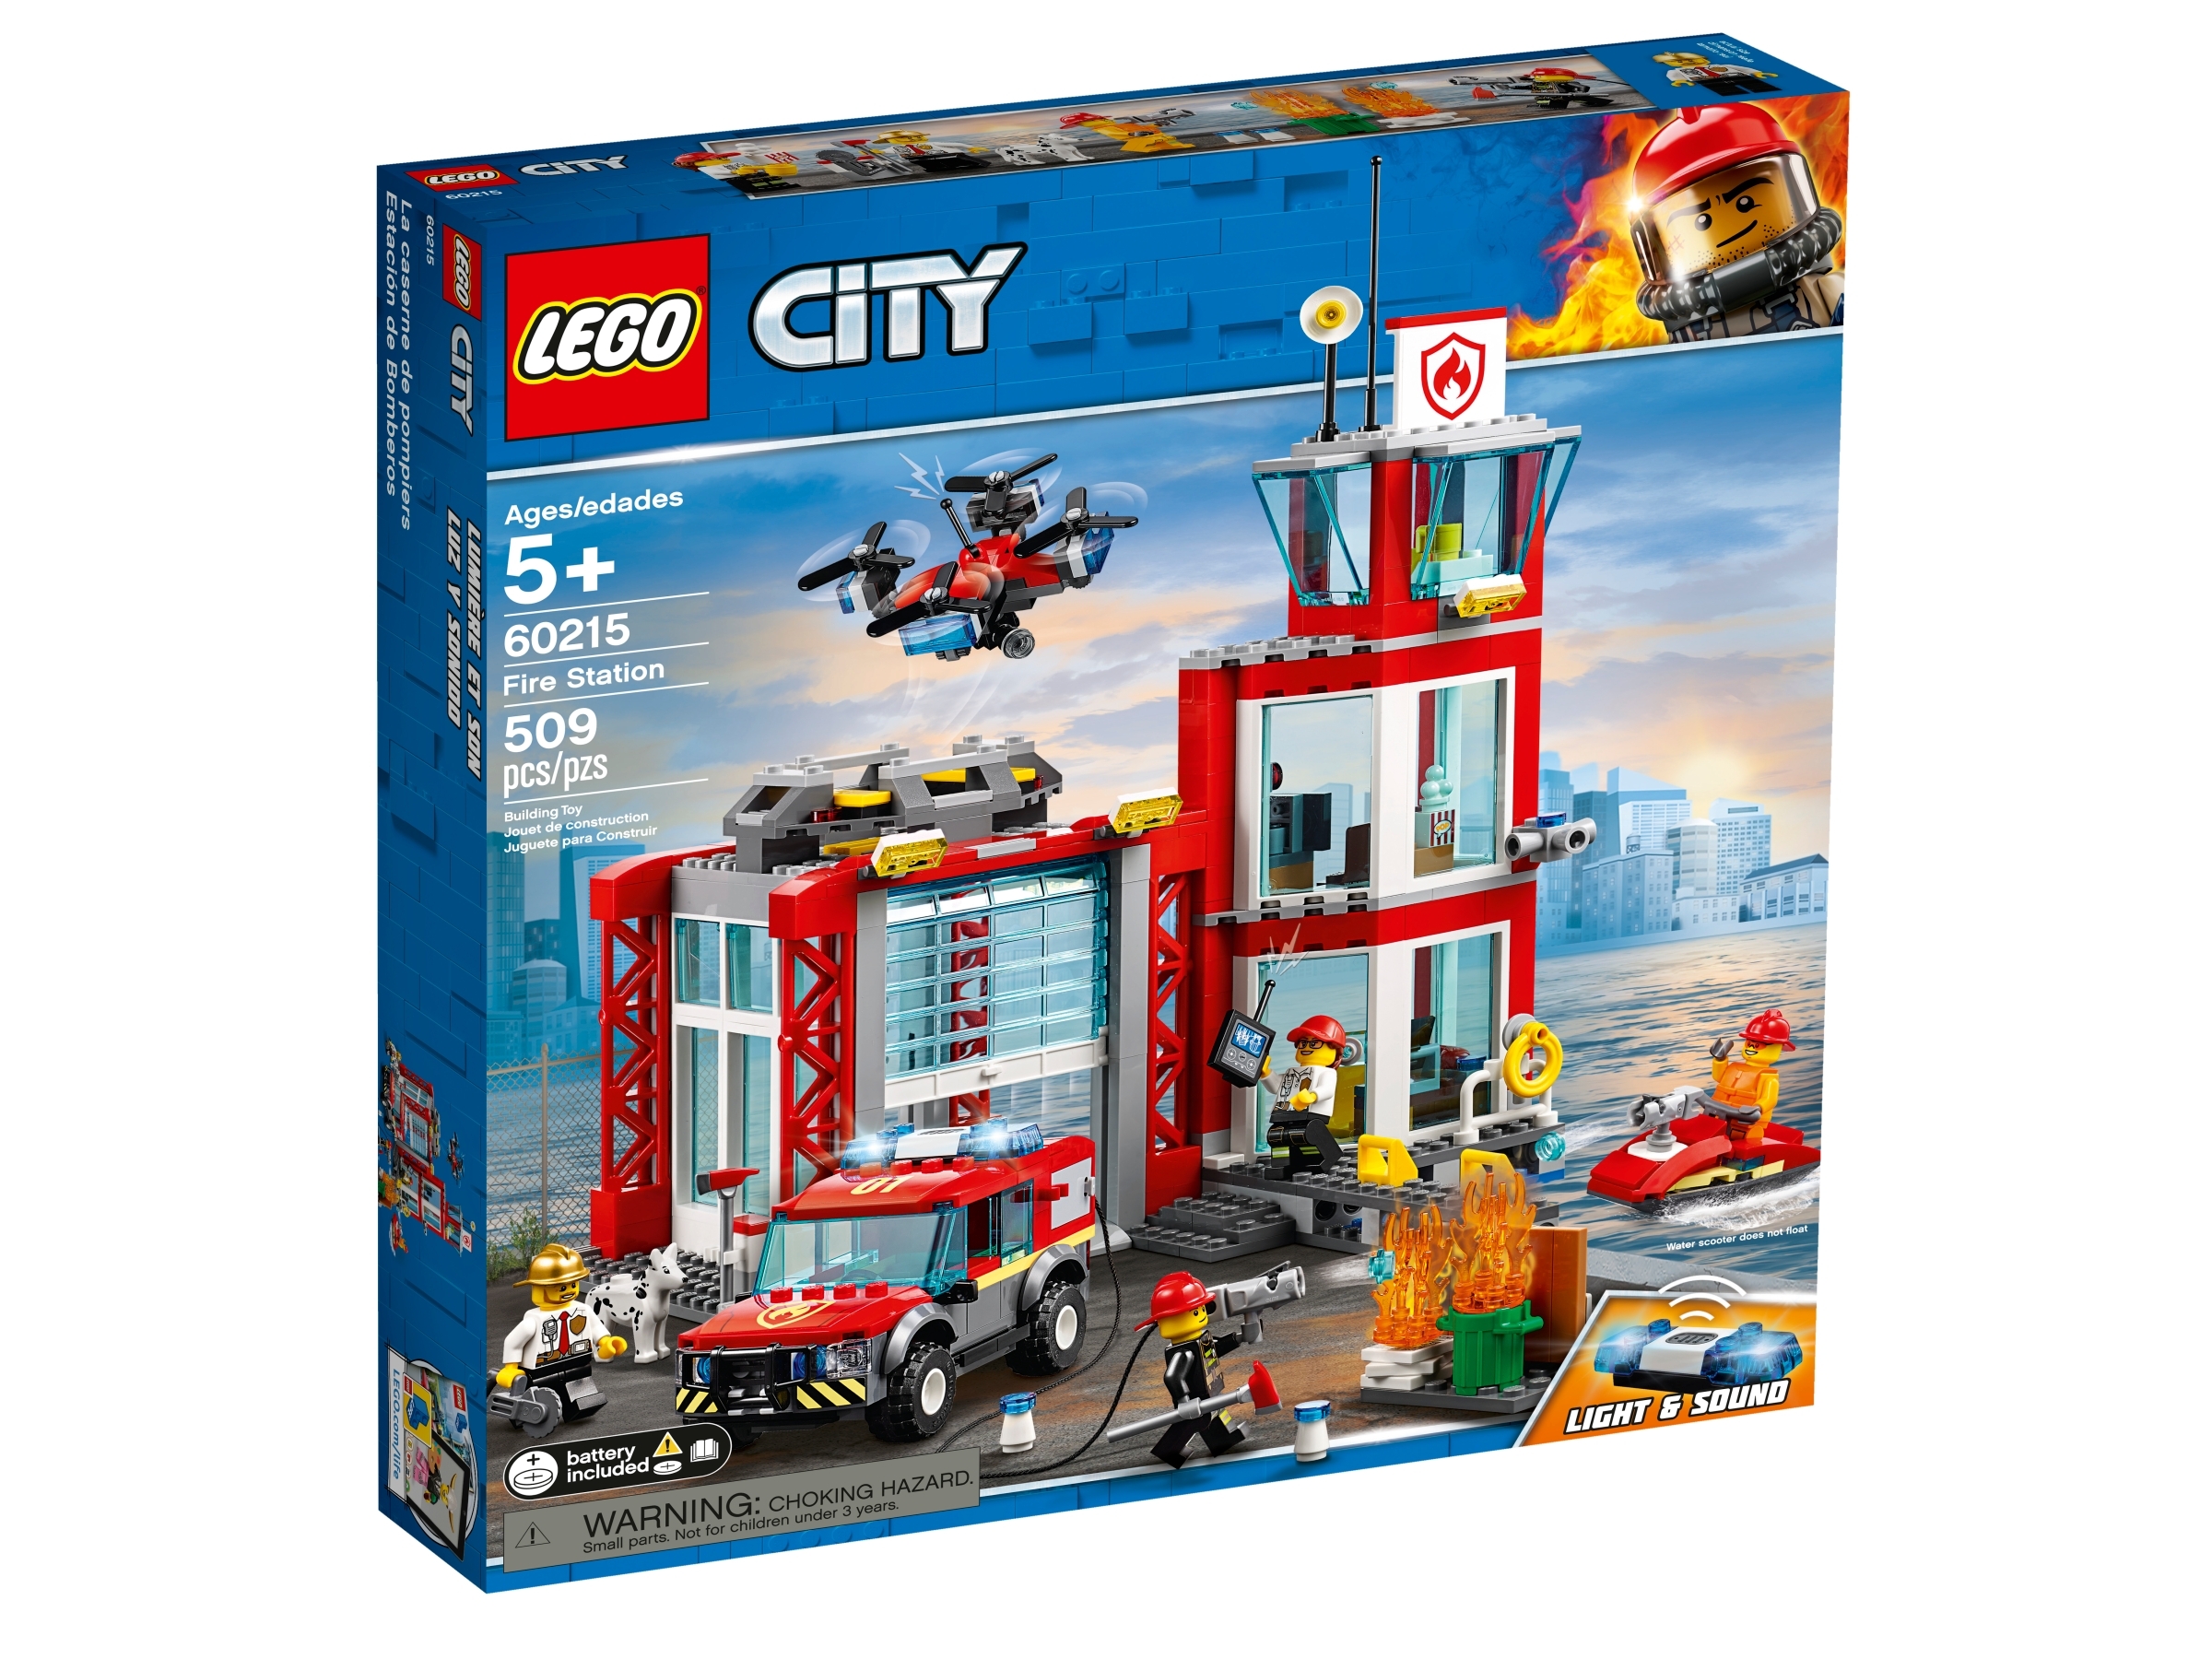 small lego fire truck